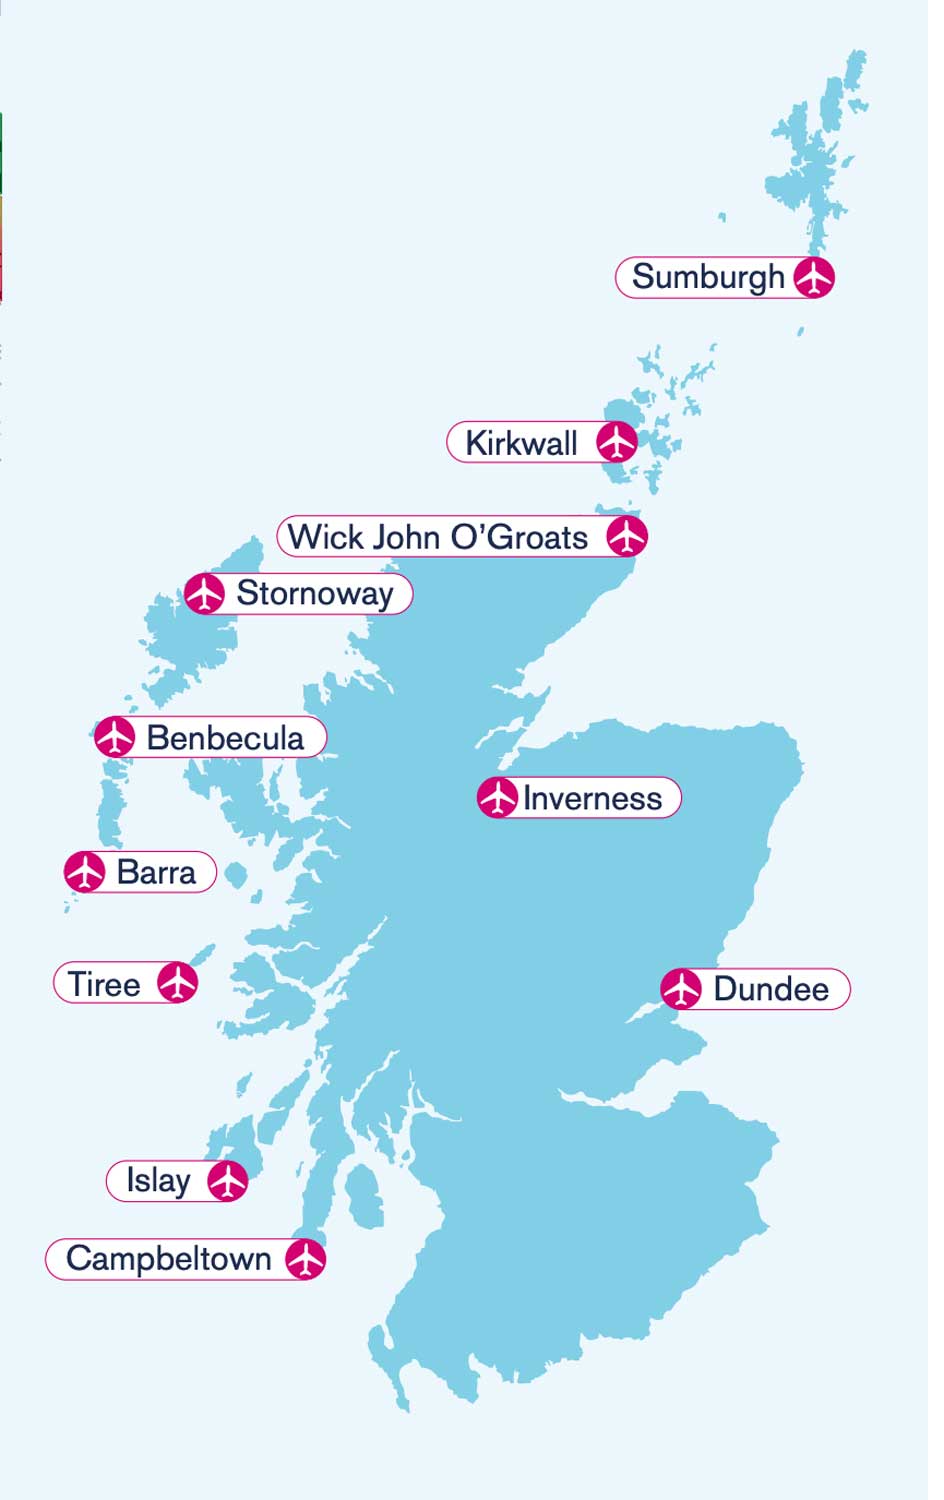 HIAL's 11 airports across Scotland